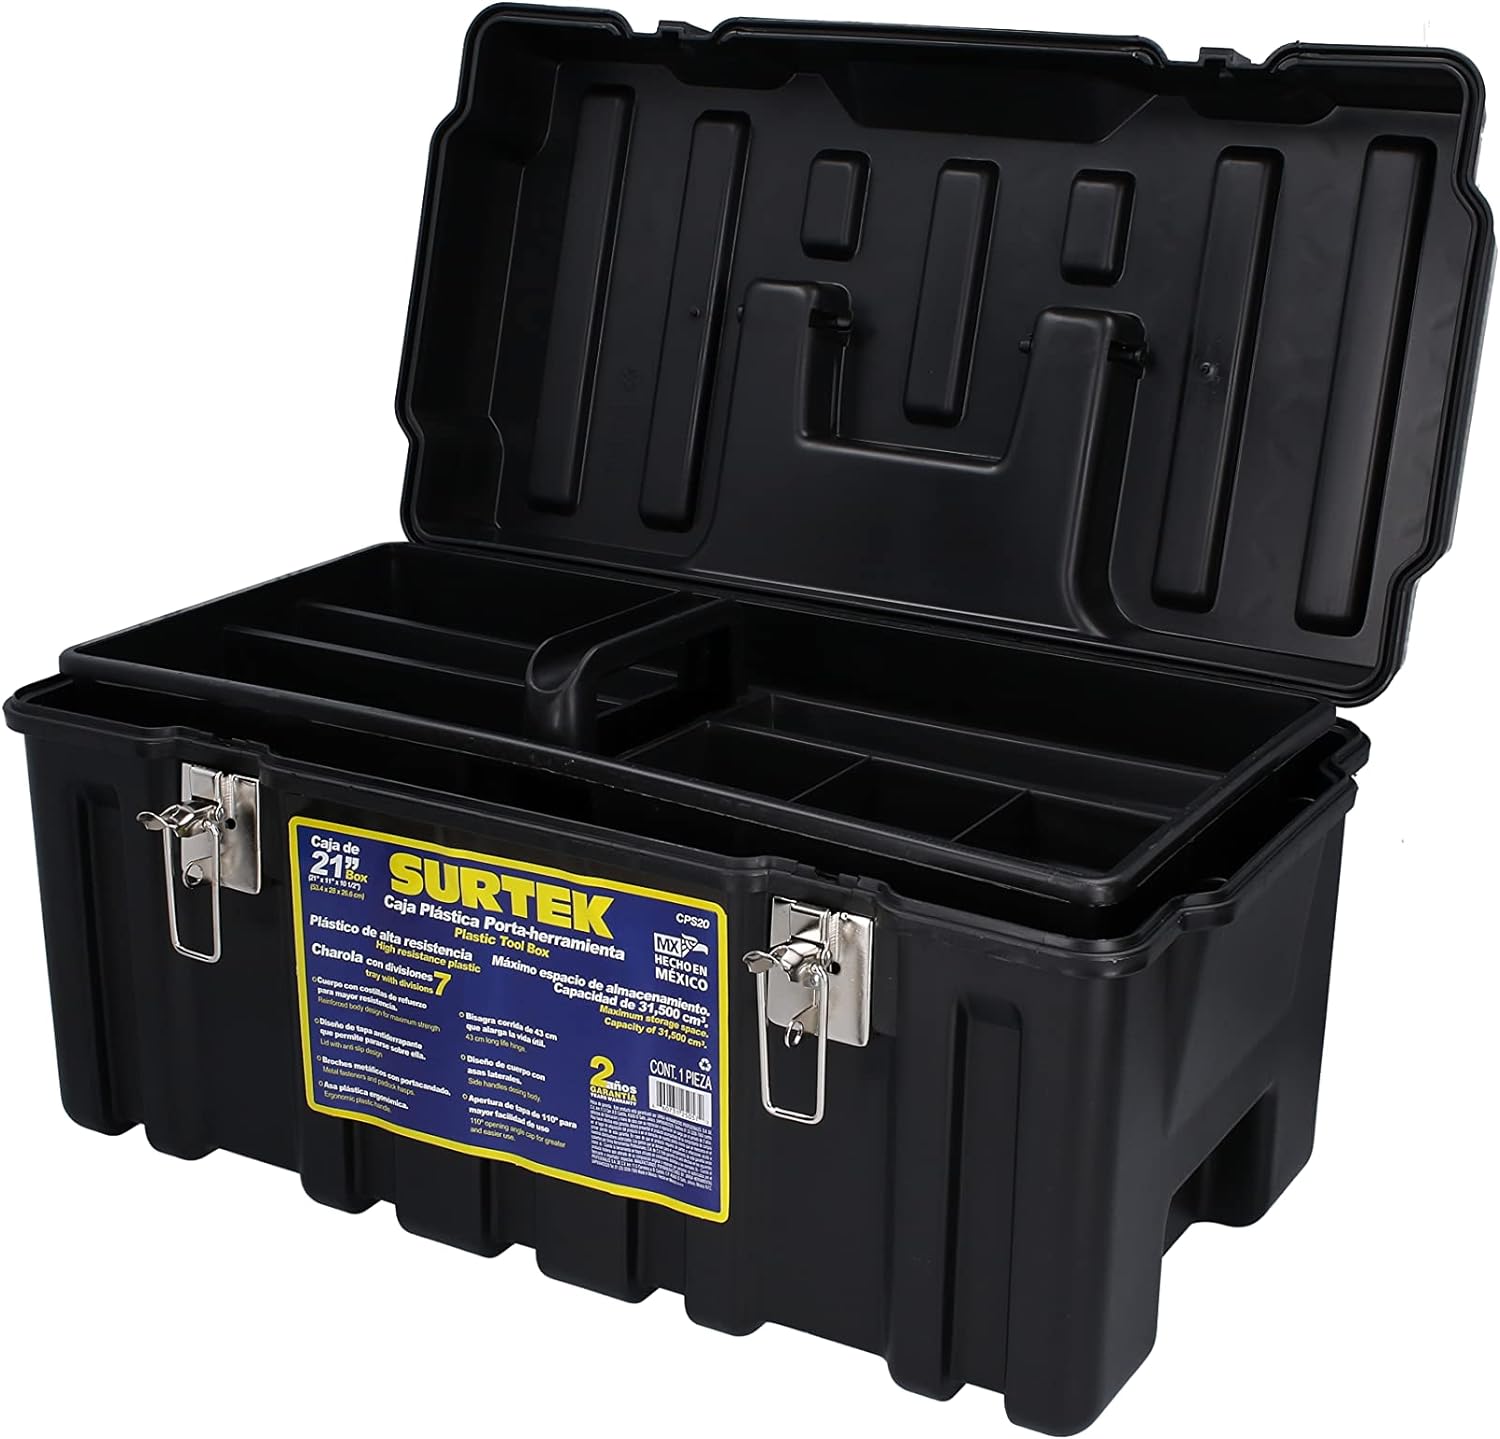 Surtek CPS20 21 Plastic Tool Box with Metal Latches .